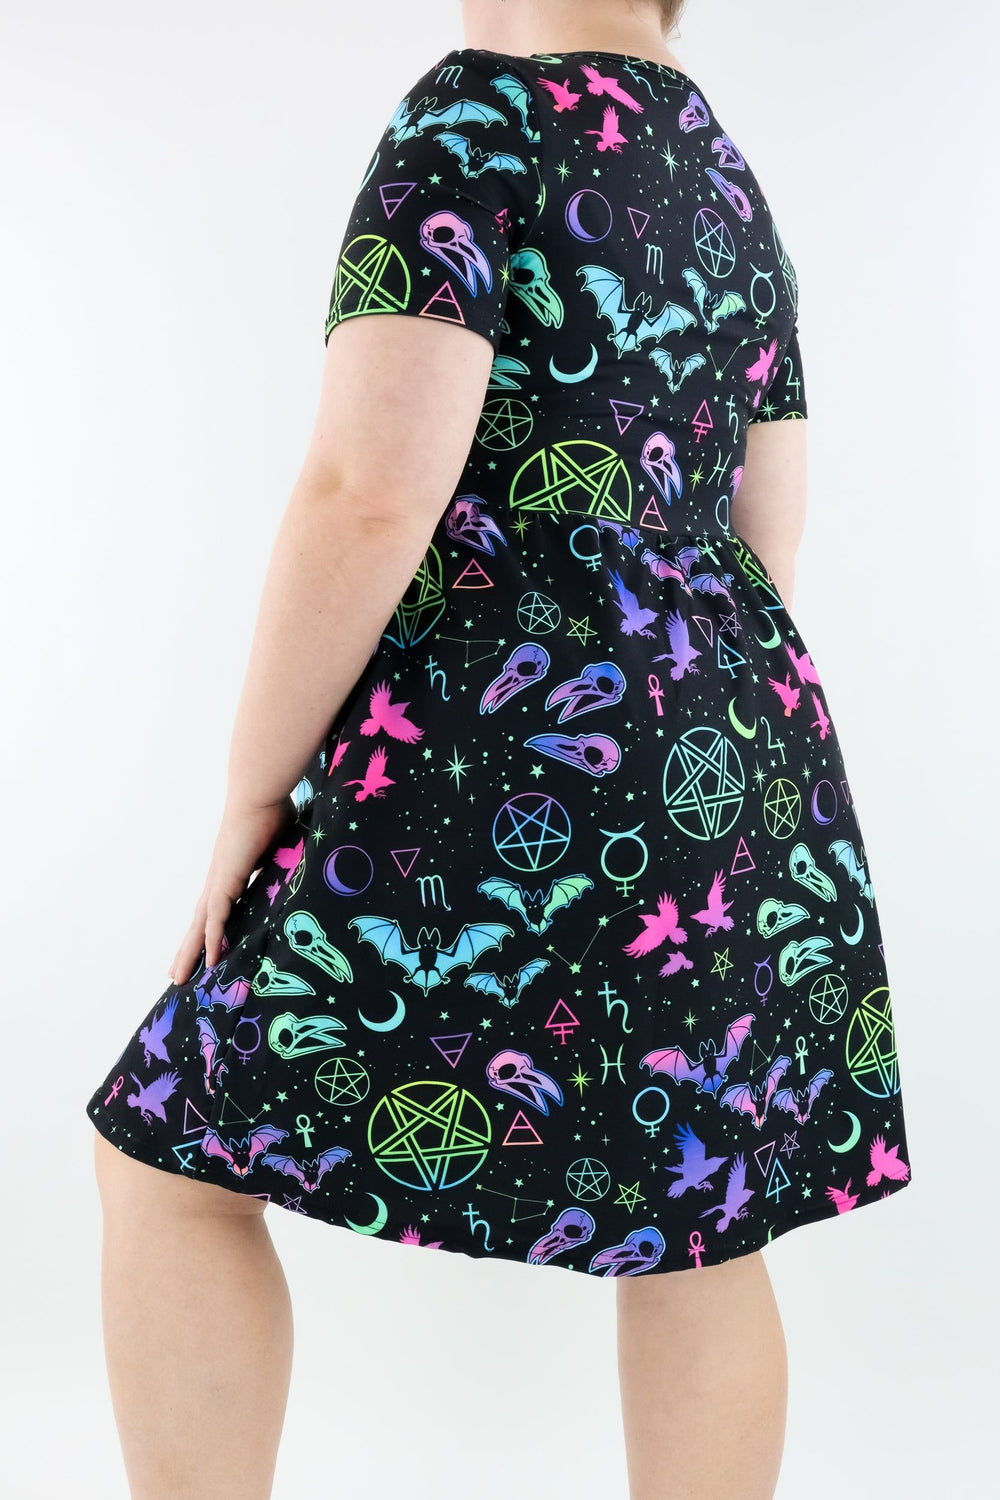 Witch Craft - Short Sleeve Skater Dress - Knee Length - Side Pockets Knee Length Skater Dress Pawlie   